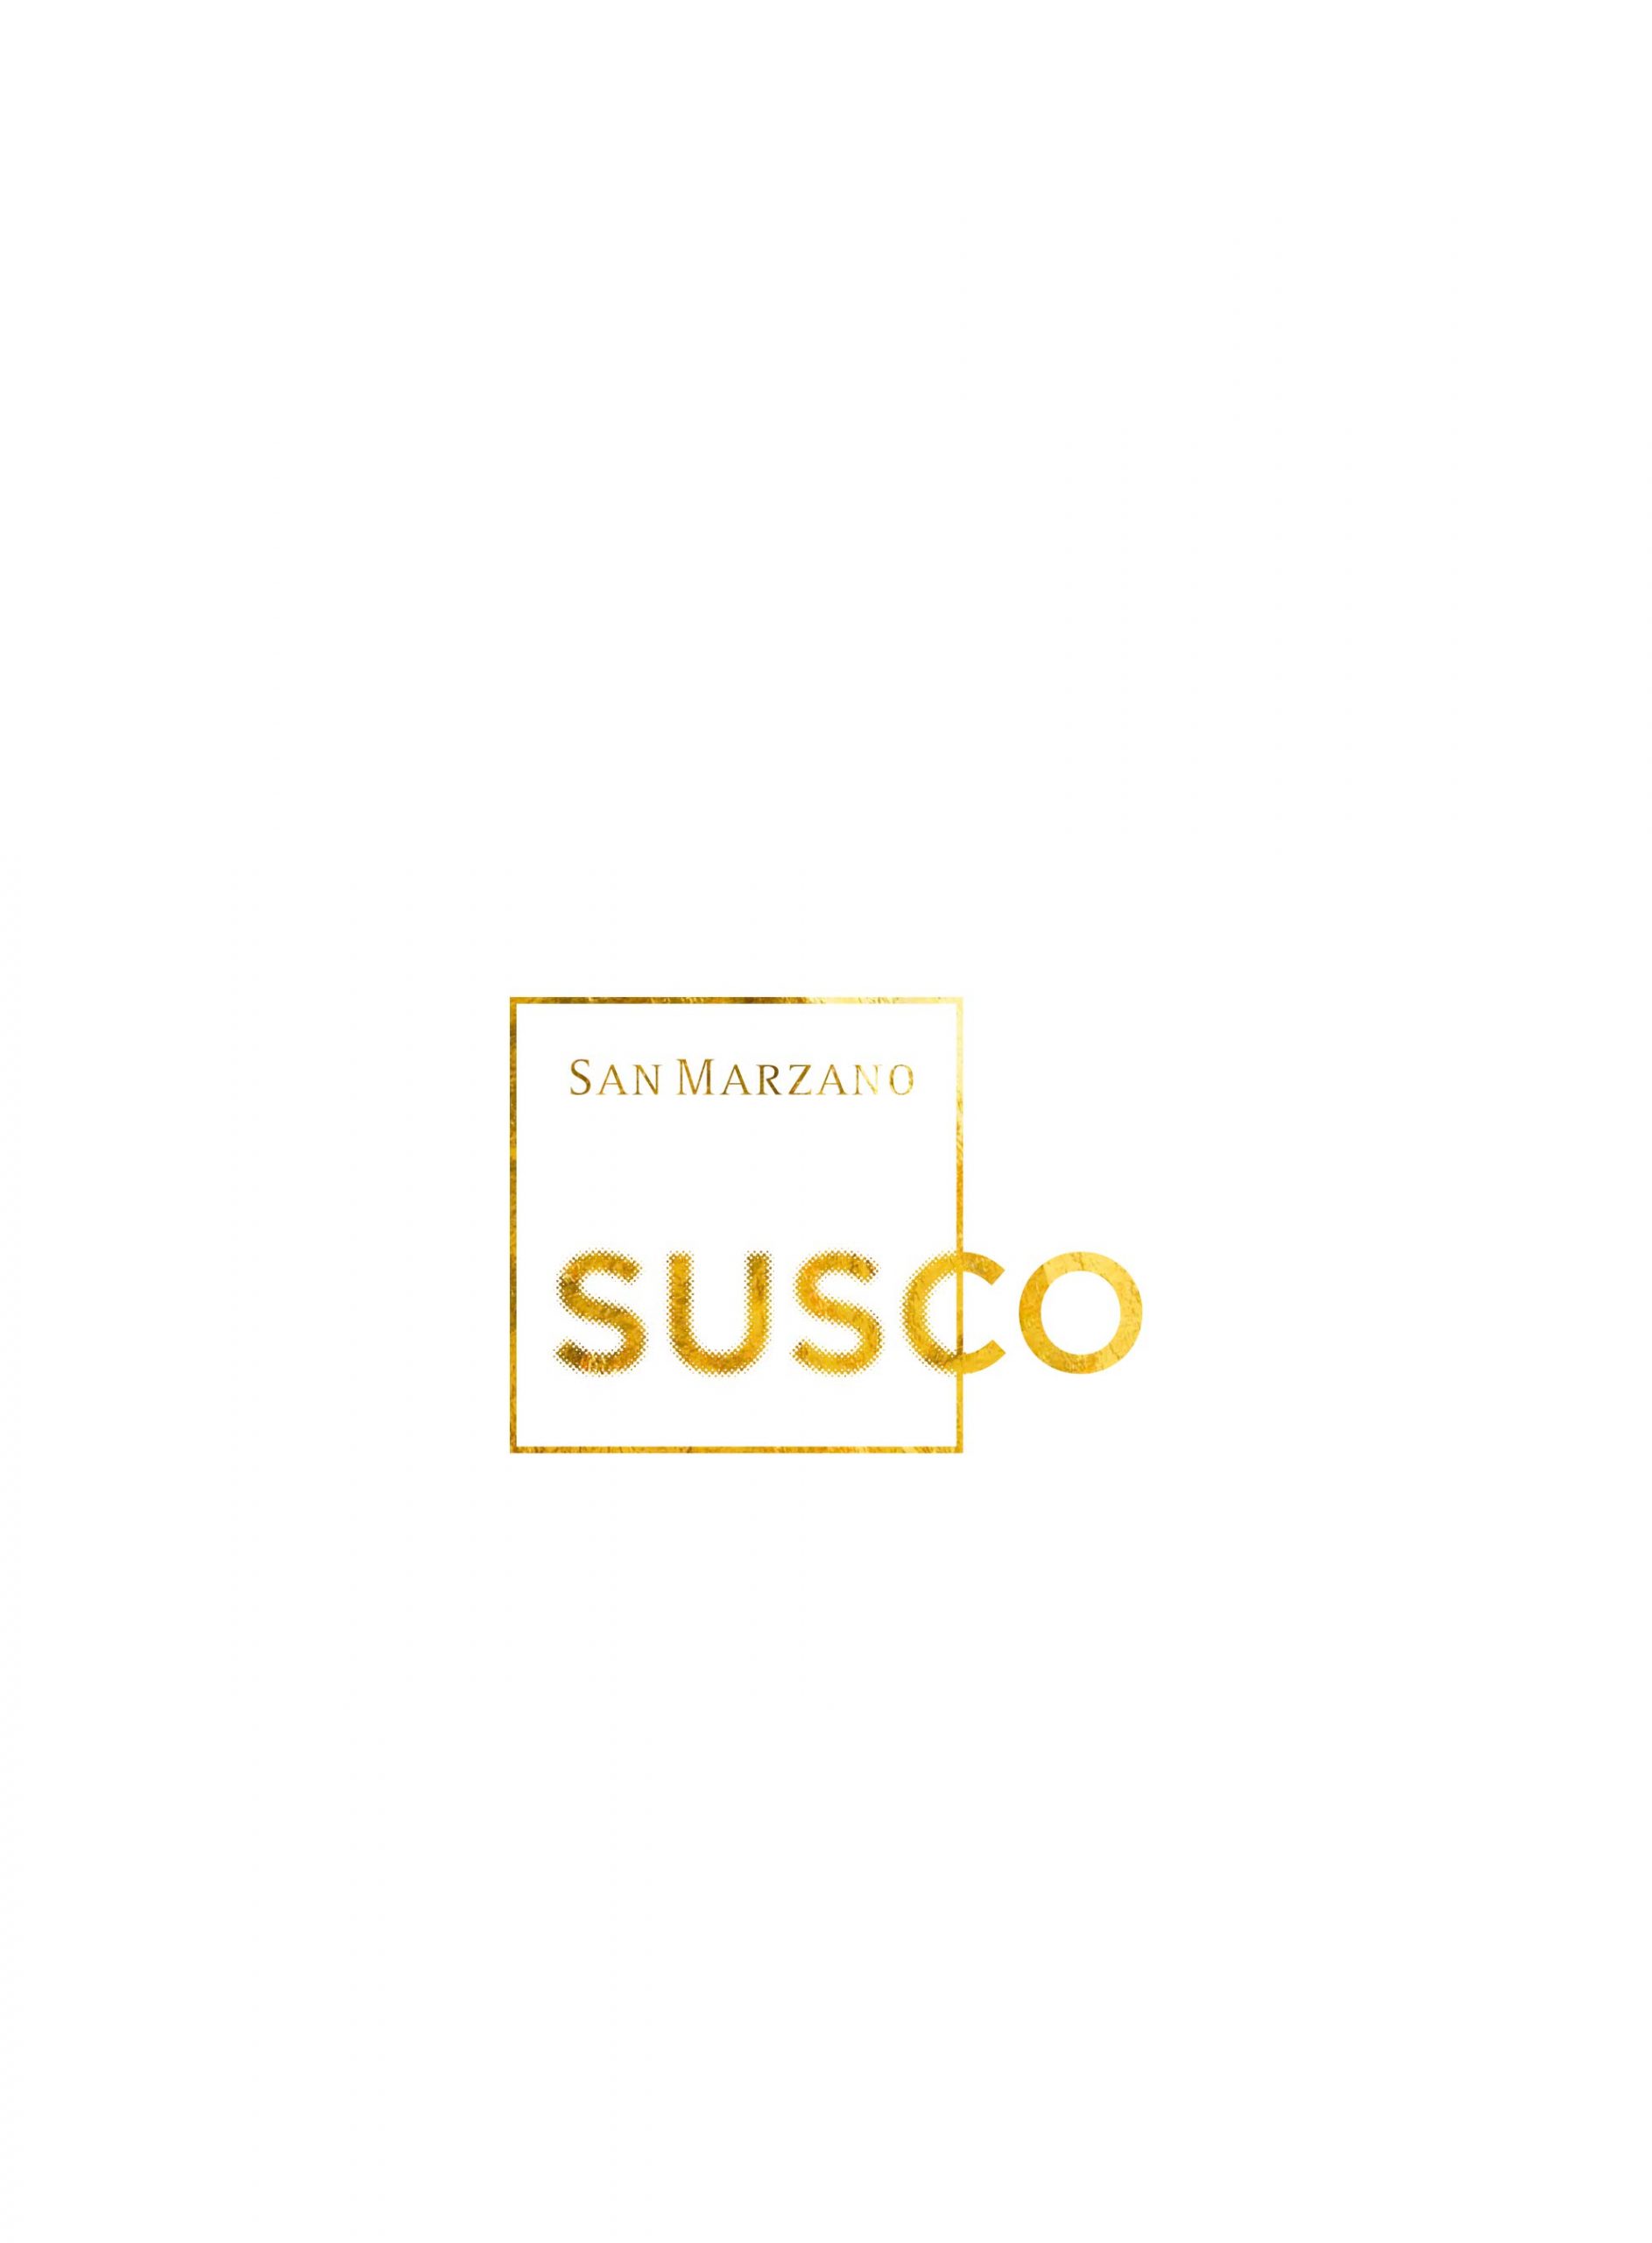 Susco wine logo